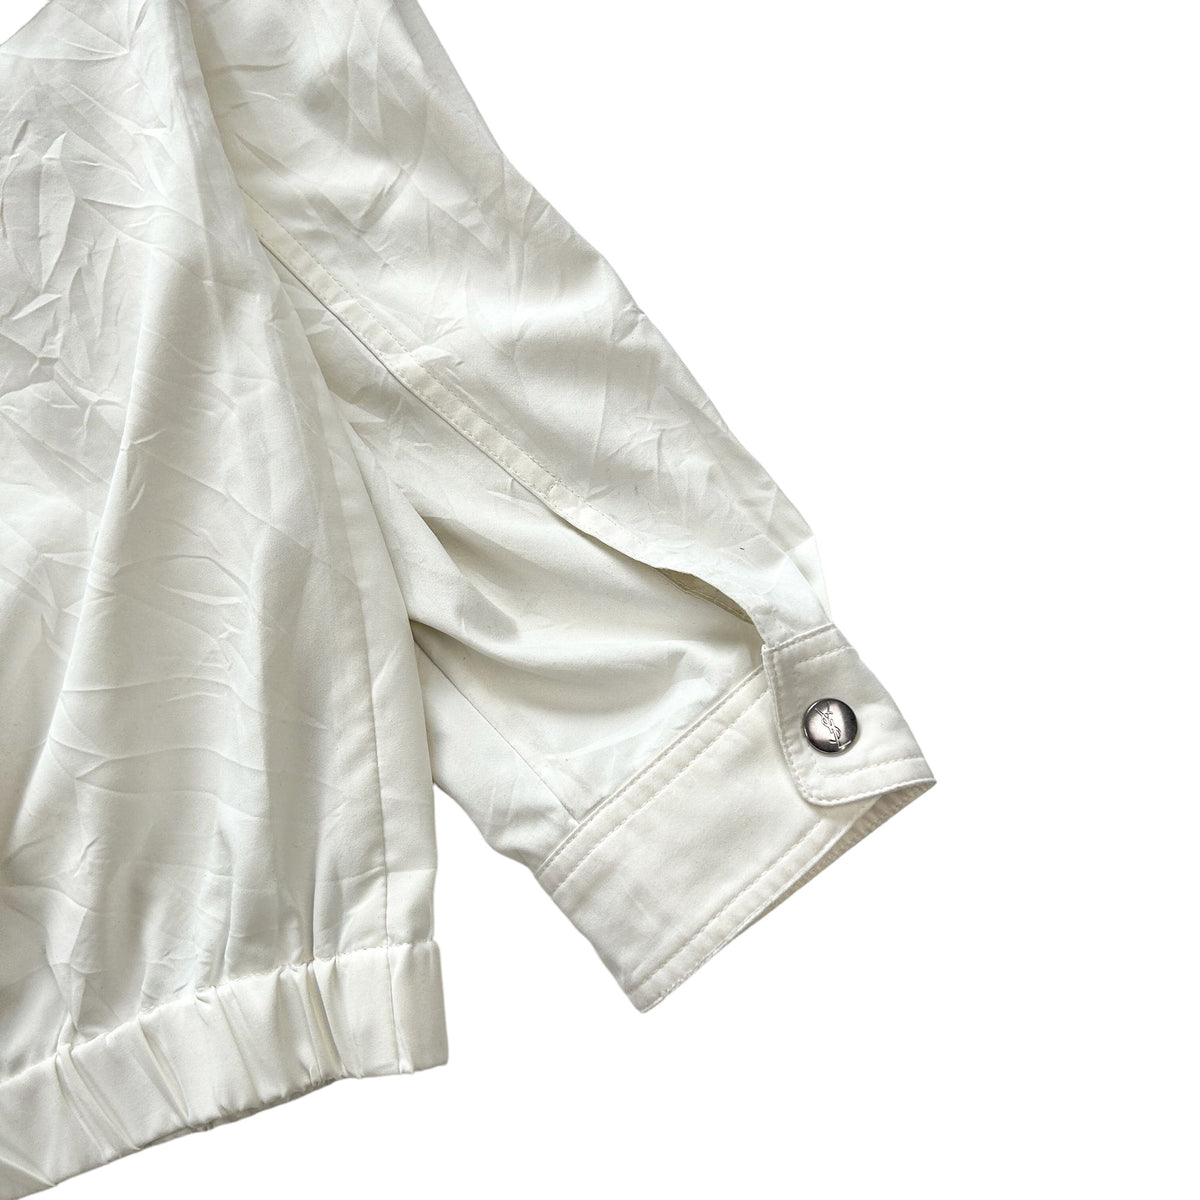 Vintage Yves Saint Laurent Track Jacket Size M